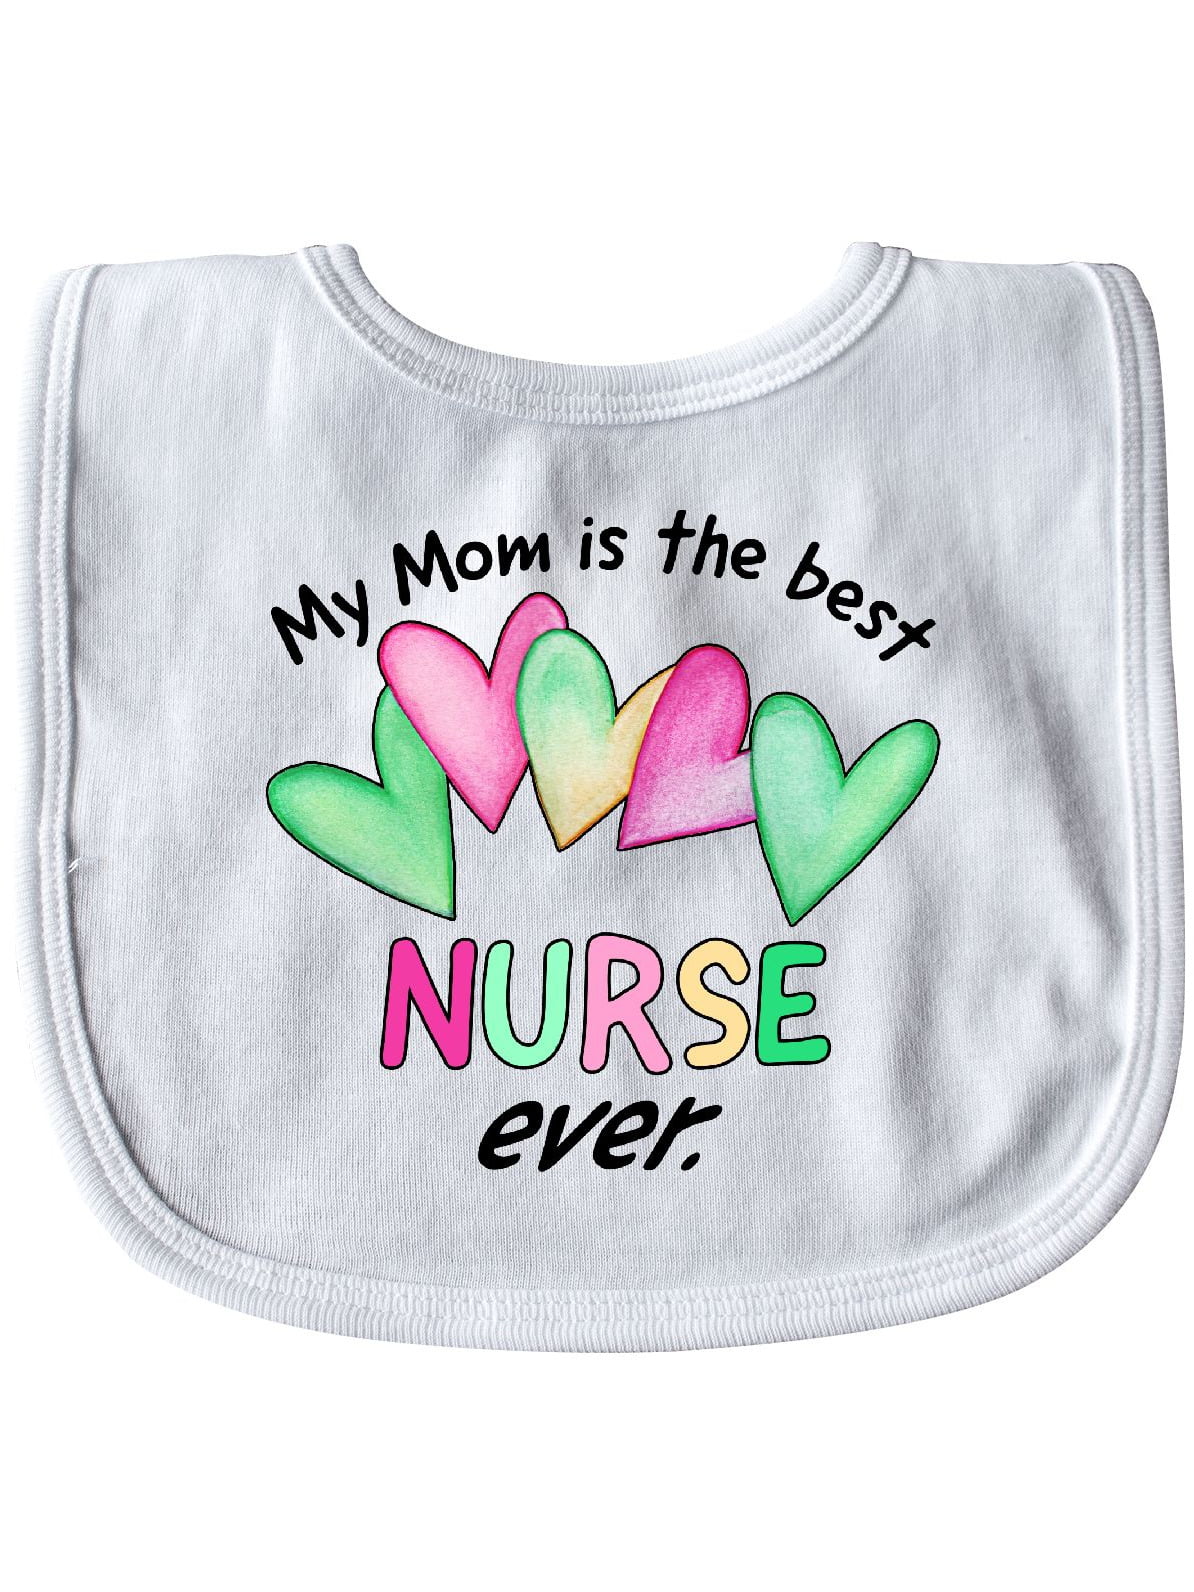 My Mom is the Best Nurse Ever Baby Bib - Walmart.com - Walmart.com